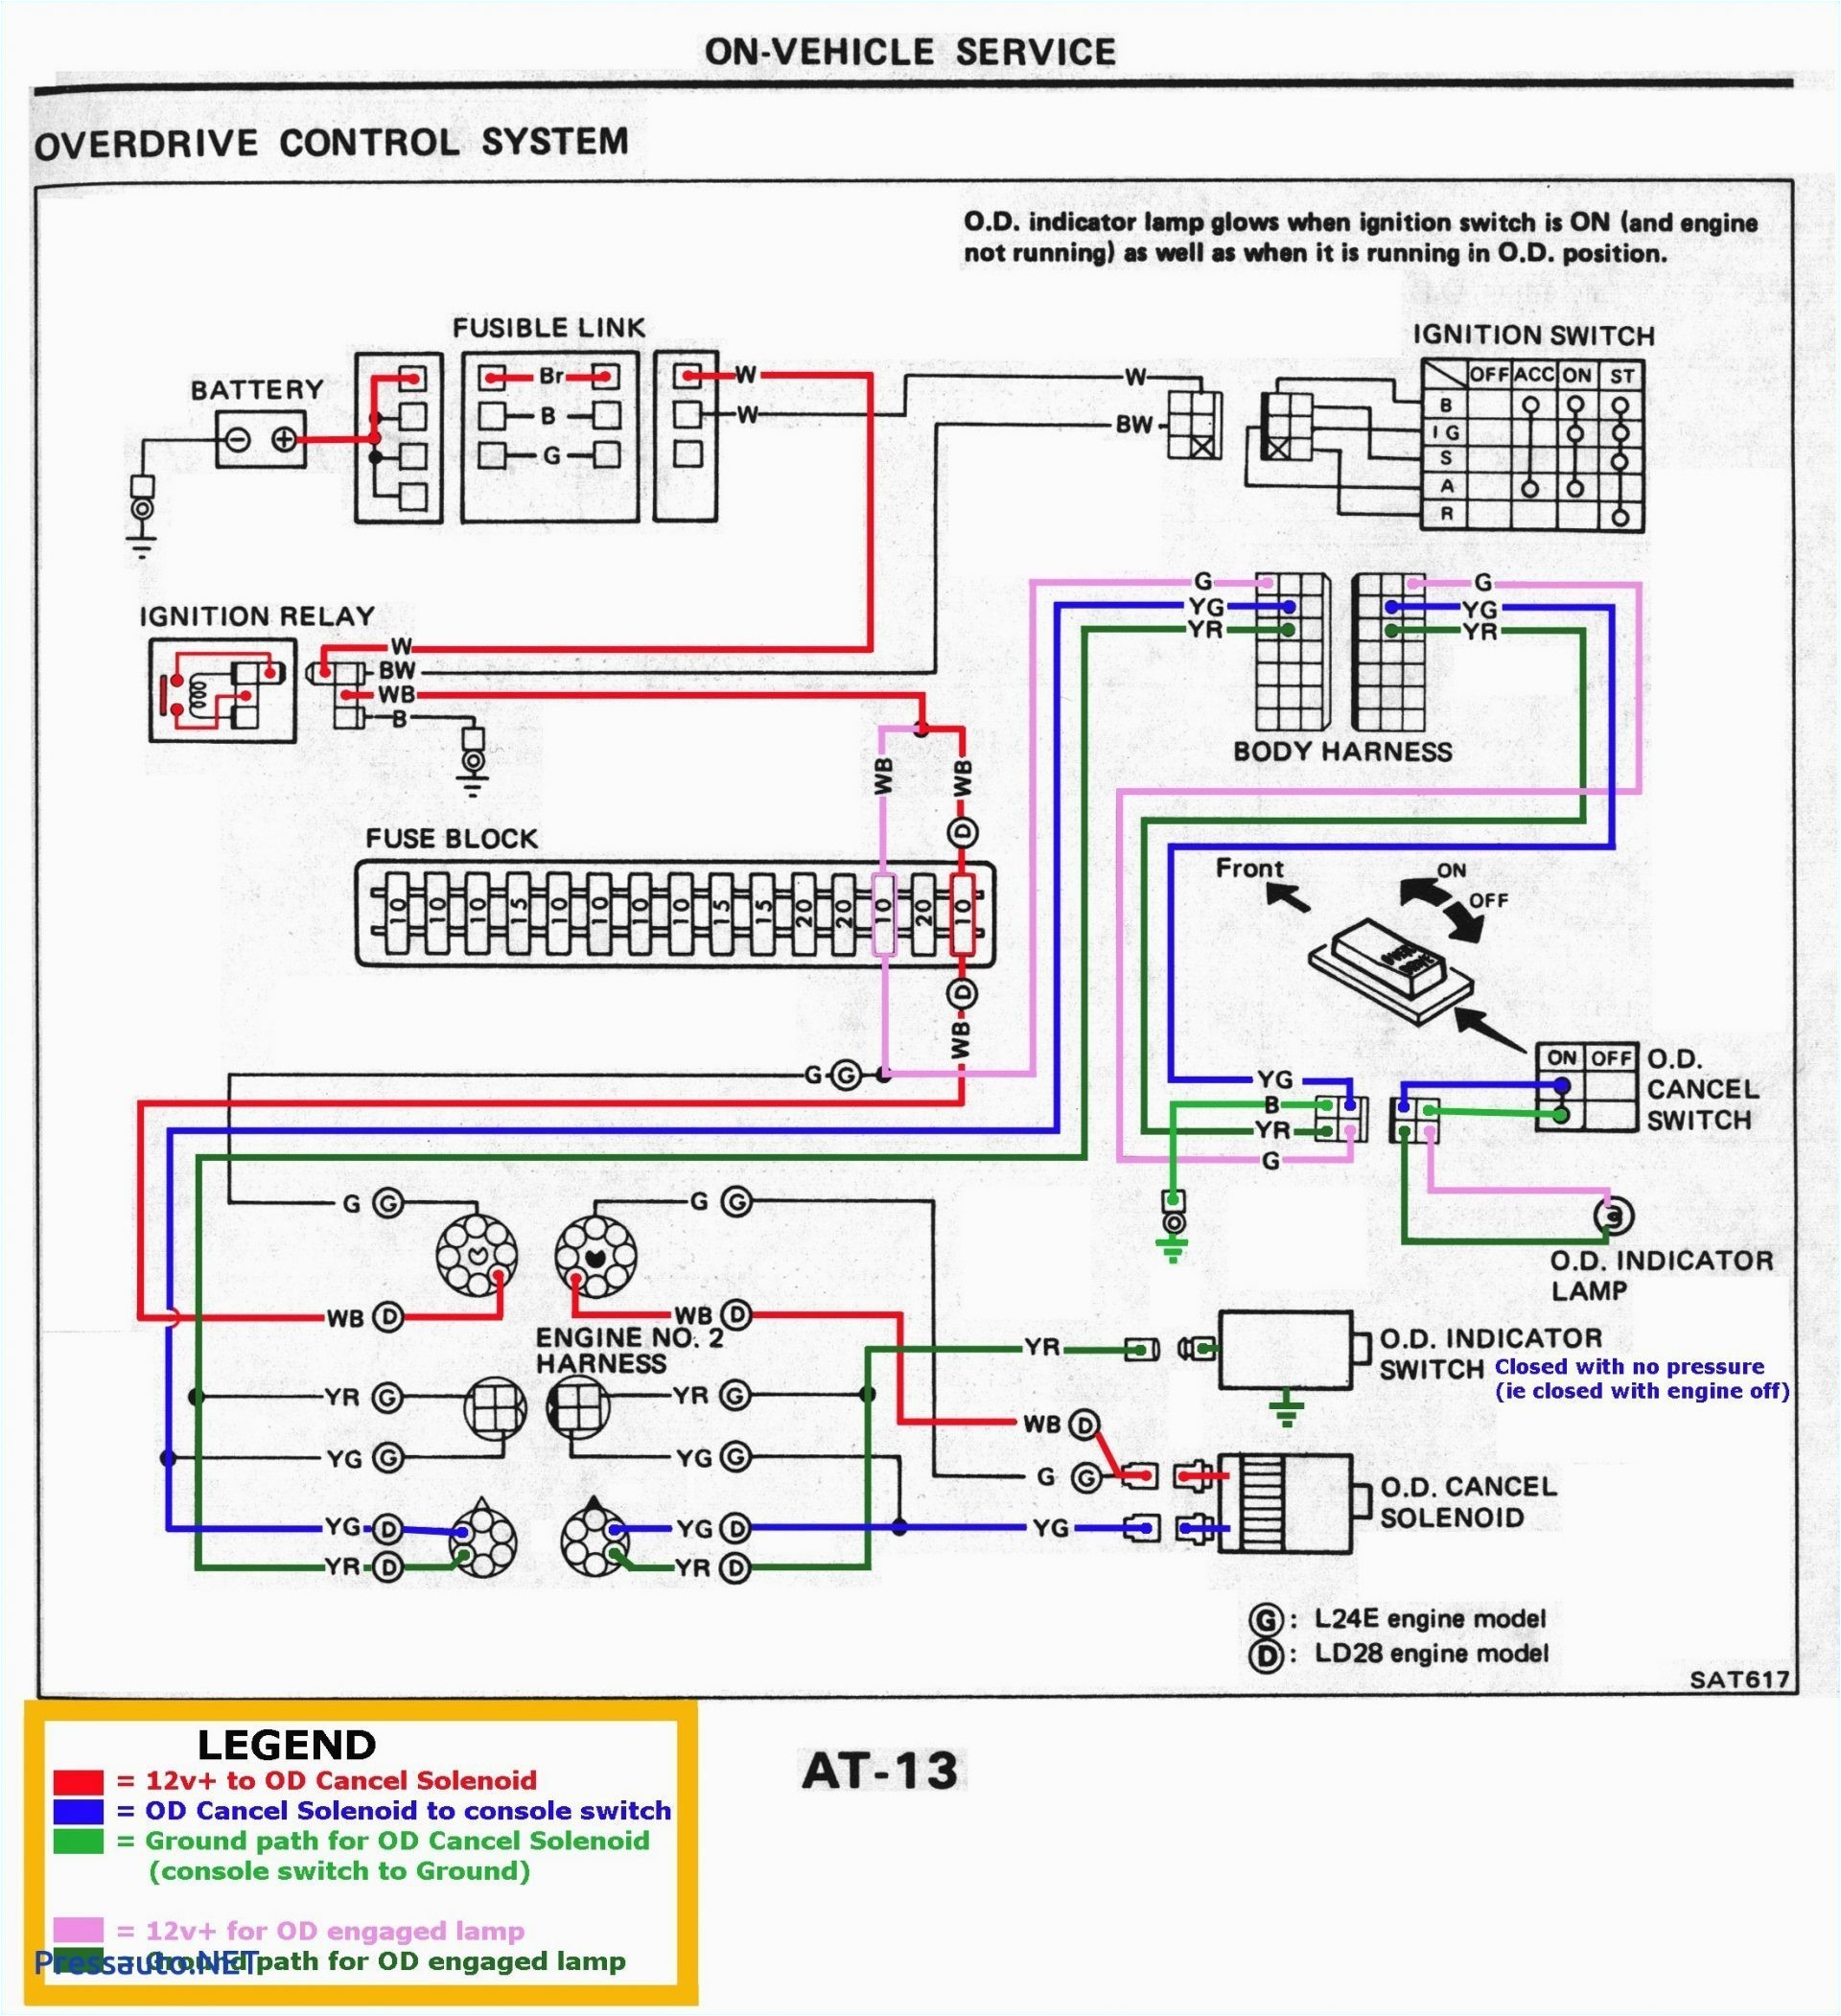 02 dodge ram sel wiring harness diagram wiring diagram view 02 dodge ram sel wiring harness diagram